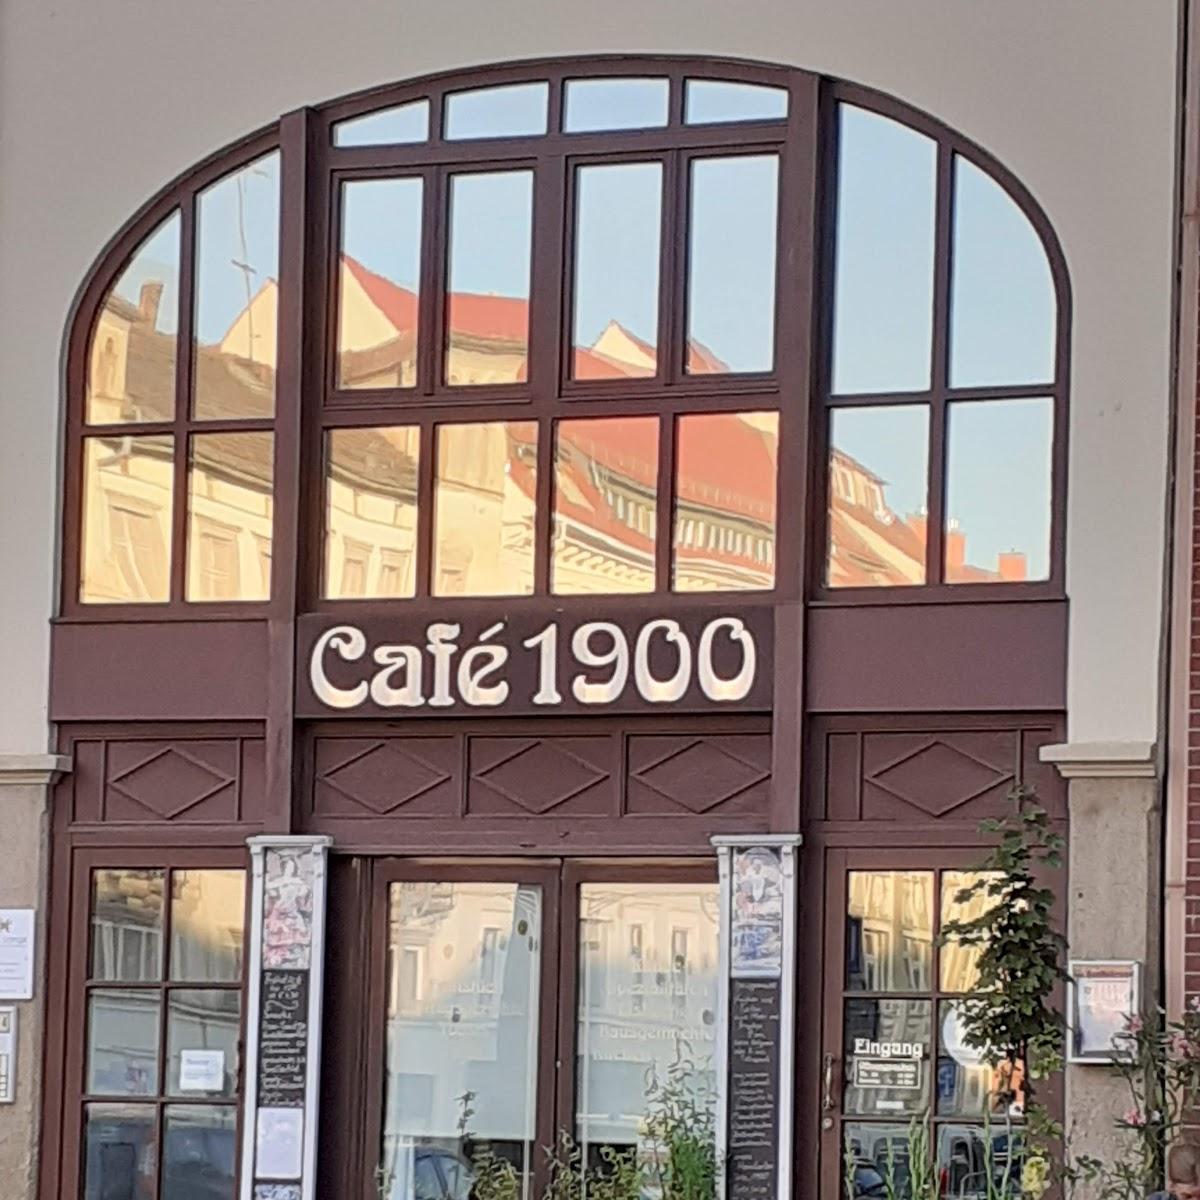 Restaurant "Cafe 1900" in Görlitz